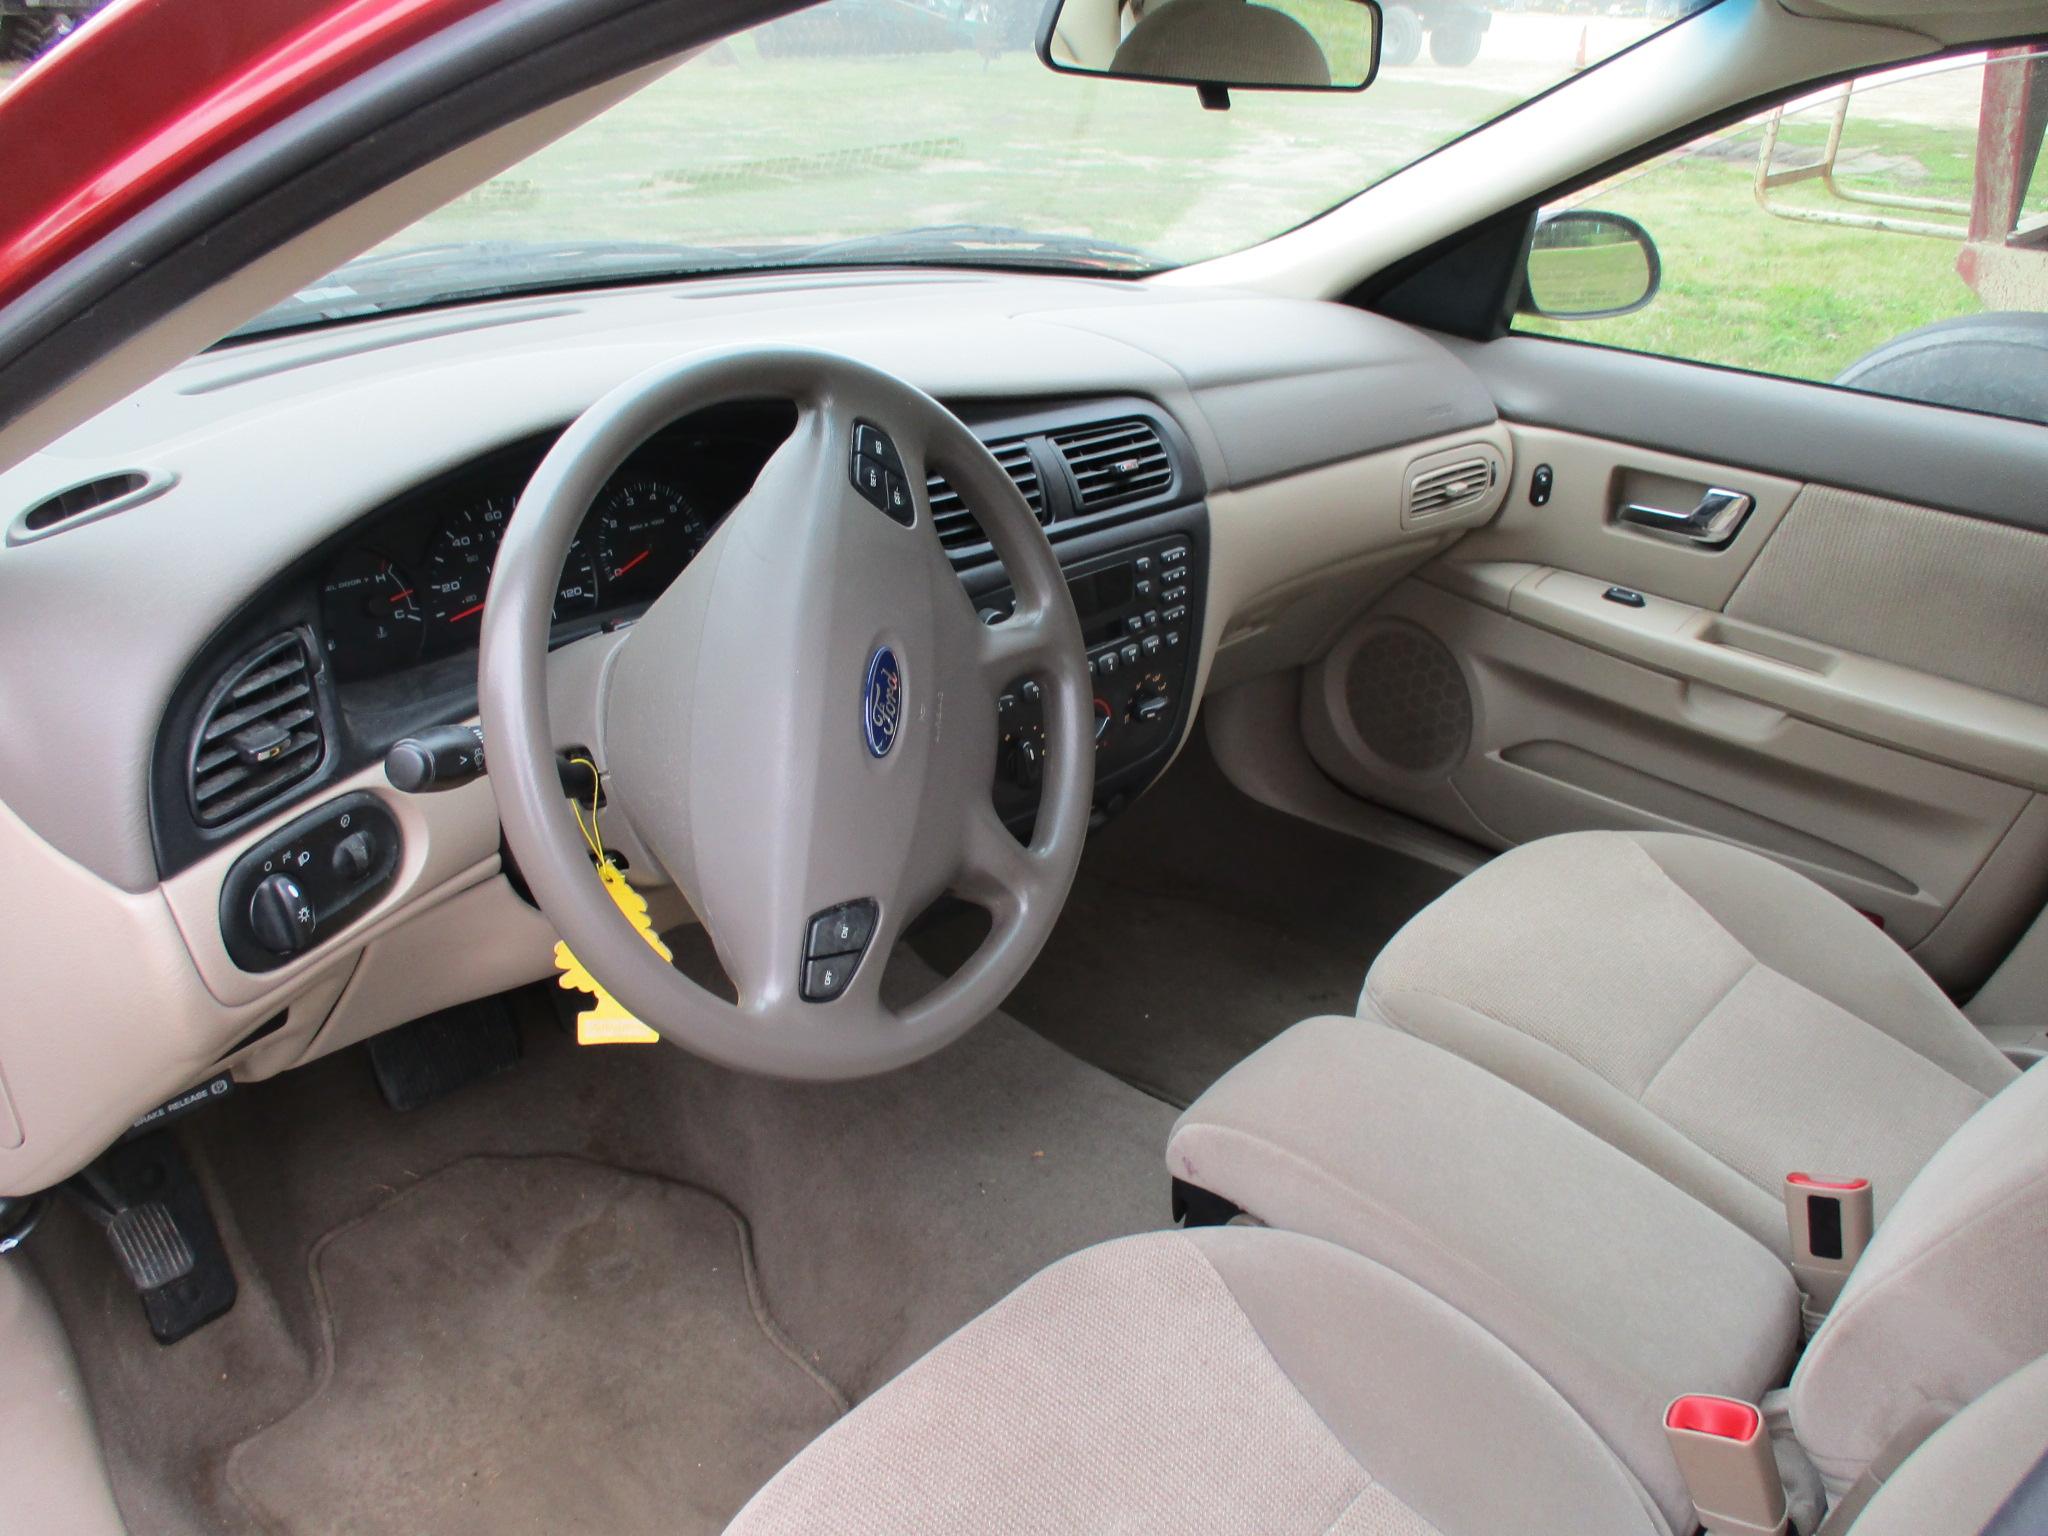 2000 Ford Tauras SE, 113,340 miles showing, power windows, locks, cruise, tilt, AC, runs & drives